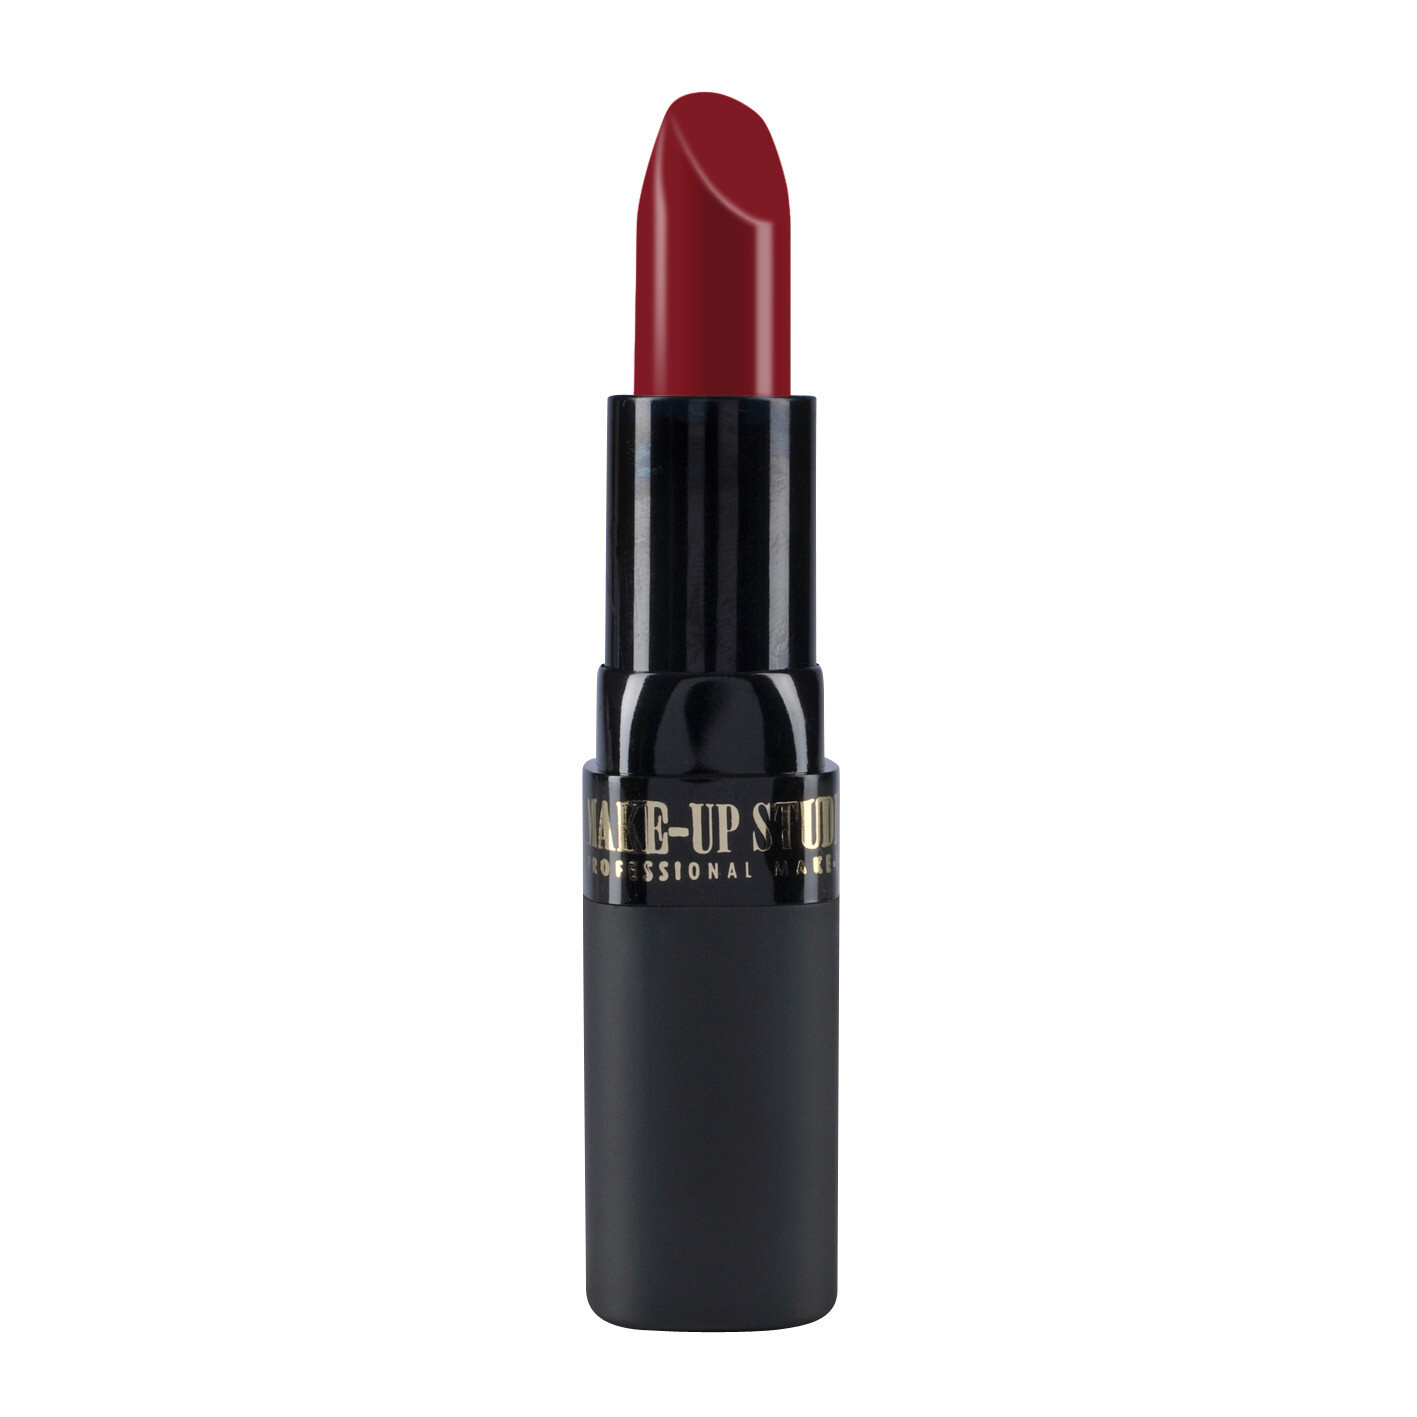 Make-up Studio Lipstick 19 Classic Red 19 Classic Red